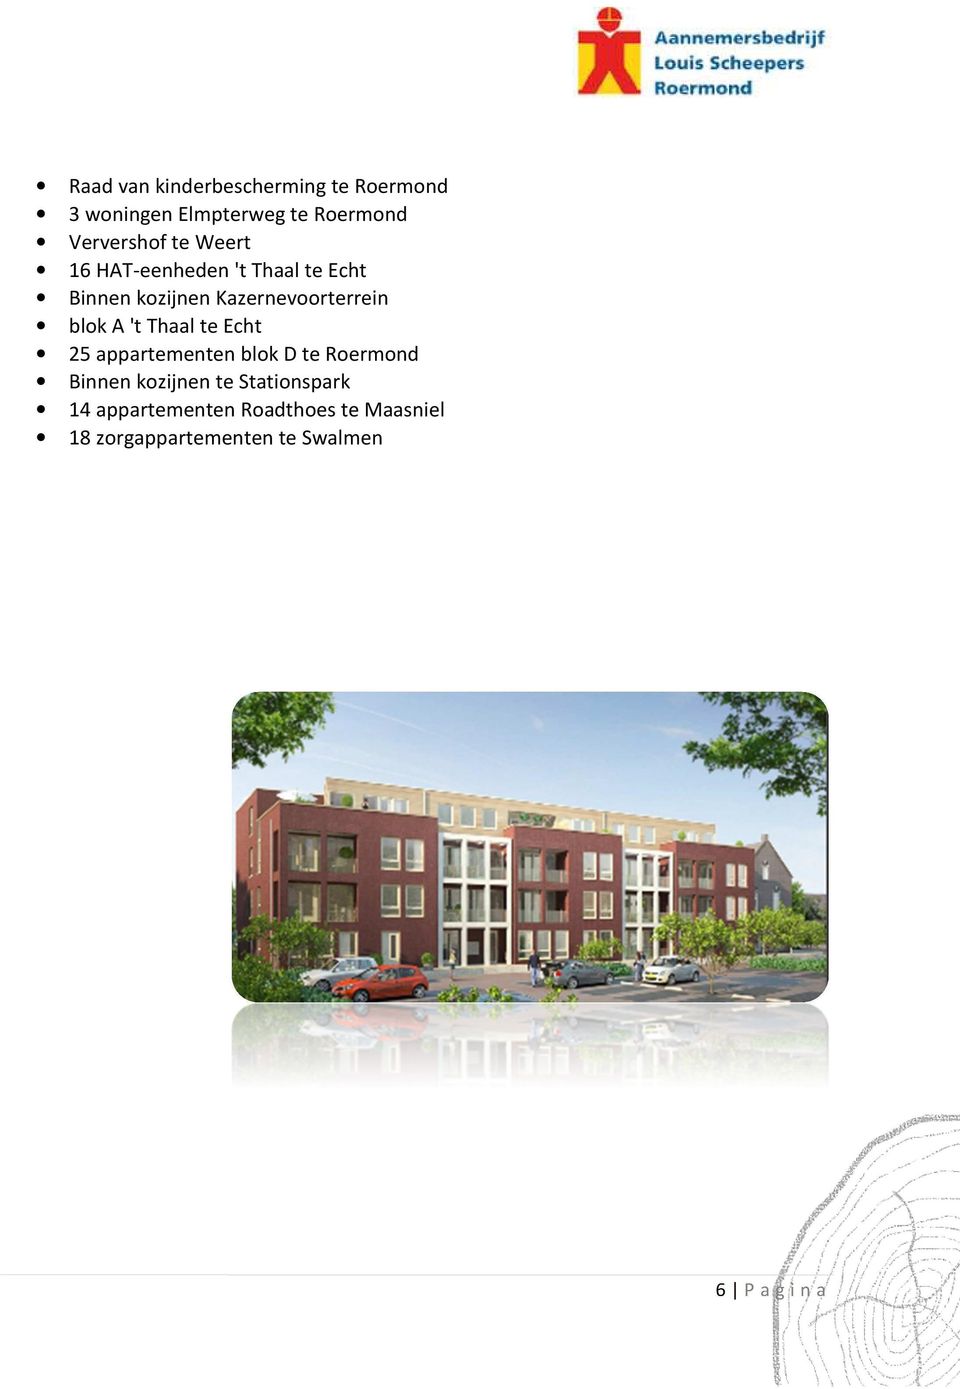 't Thaal te Echt 25 appartementen blok D te Roermond Binnen kozijnen te Stationspark